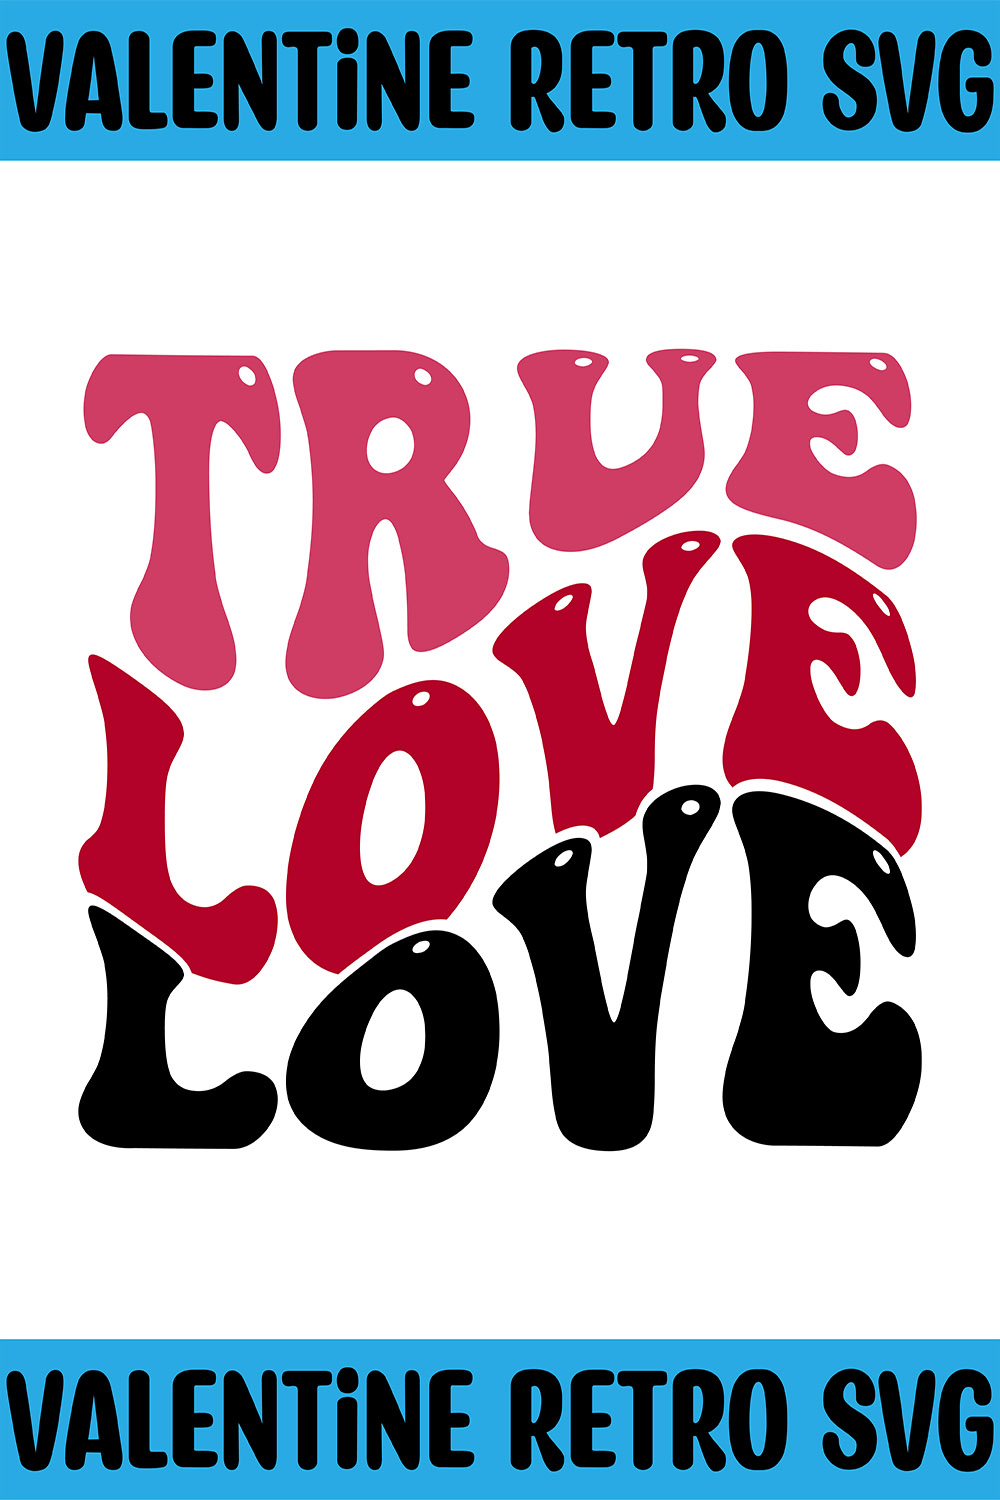 True Love Retro SVG pinterest preview image.